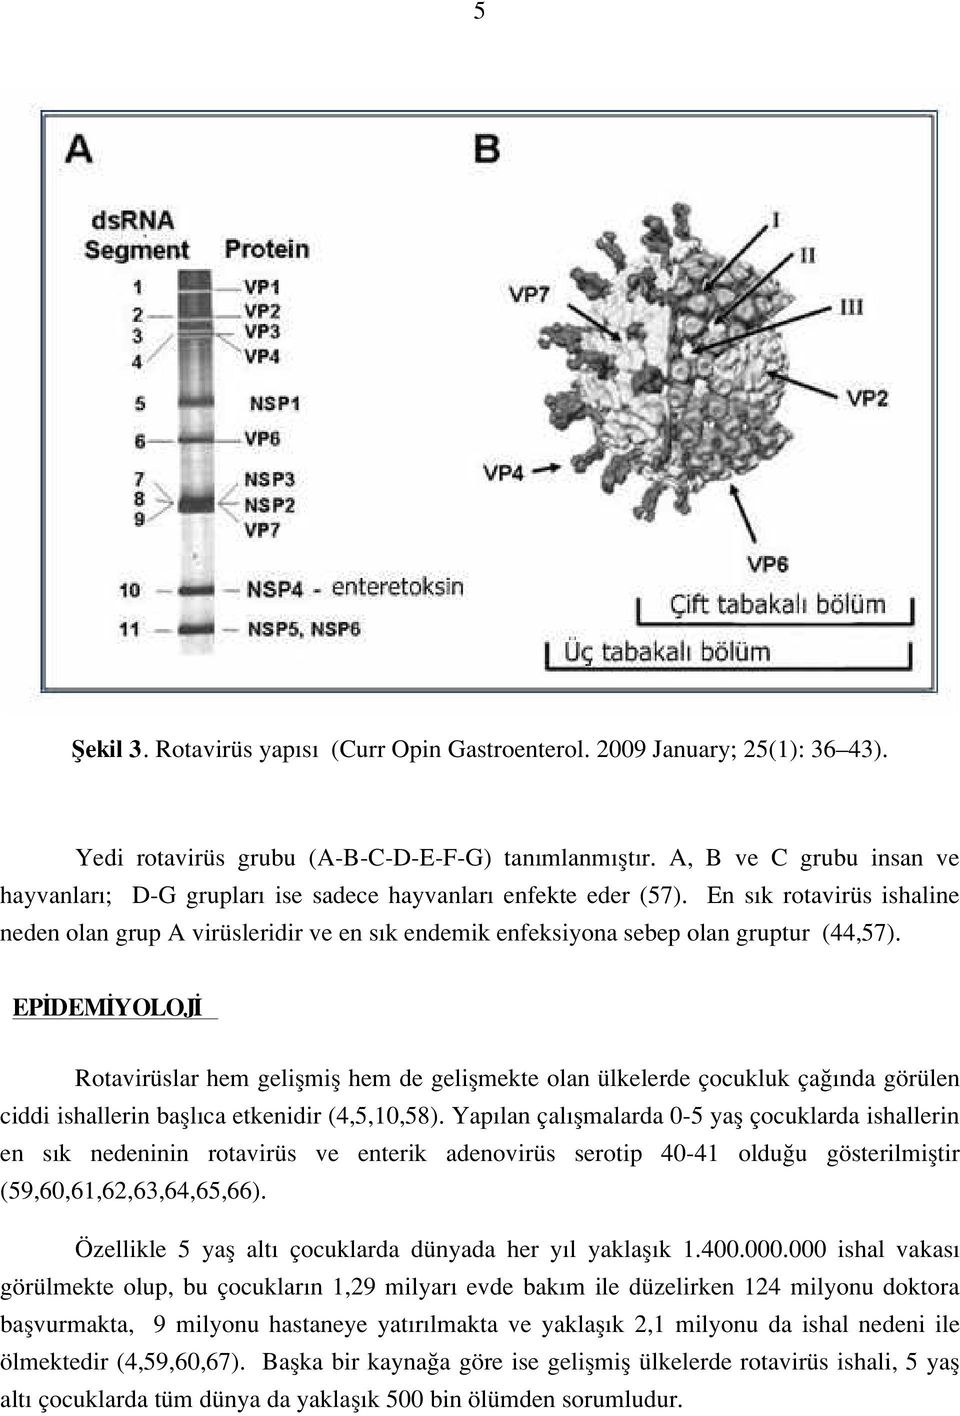 En s k rotavirüs ishaline neden olan grup A virüsleridir ve en s k endemik enfeksiyona sebep olan gruptur (44,57).